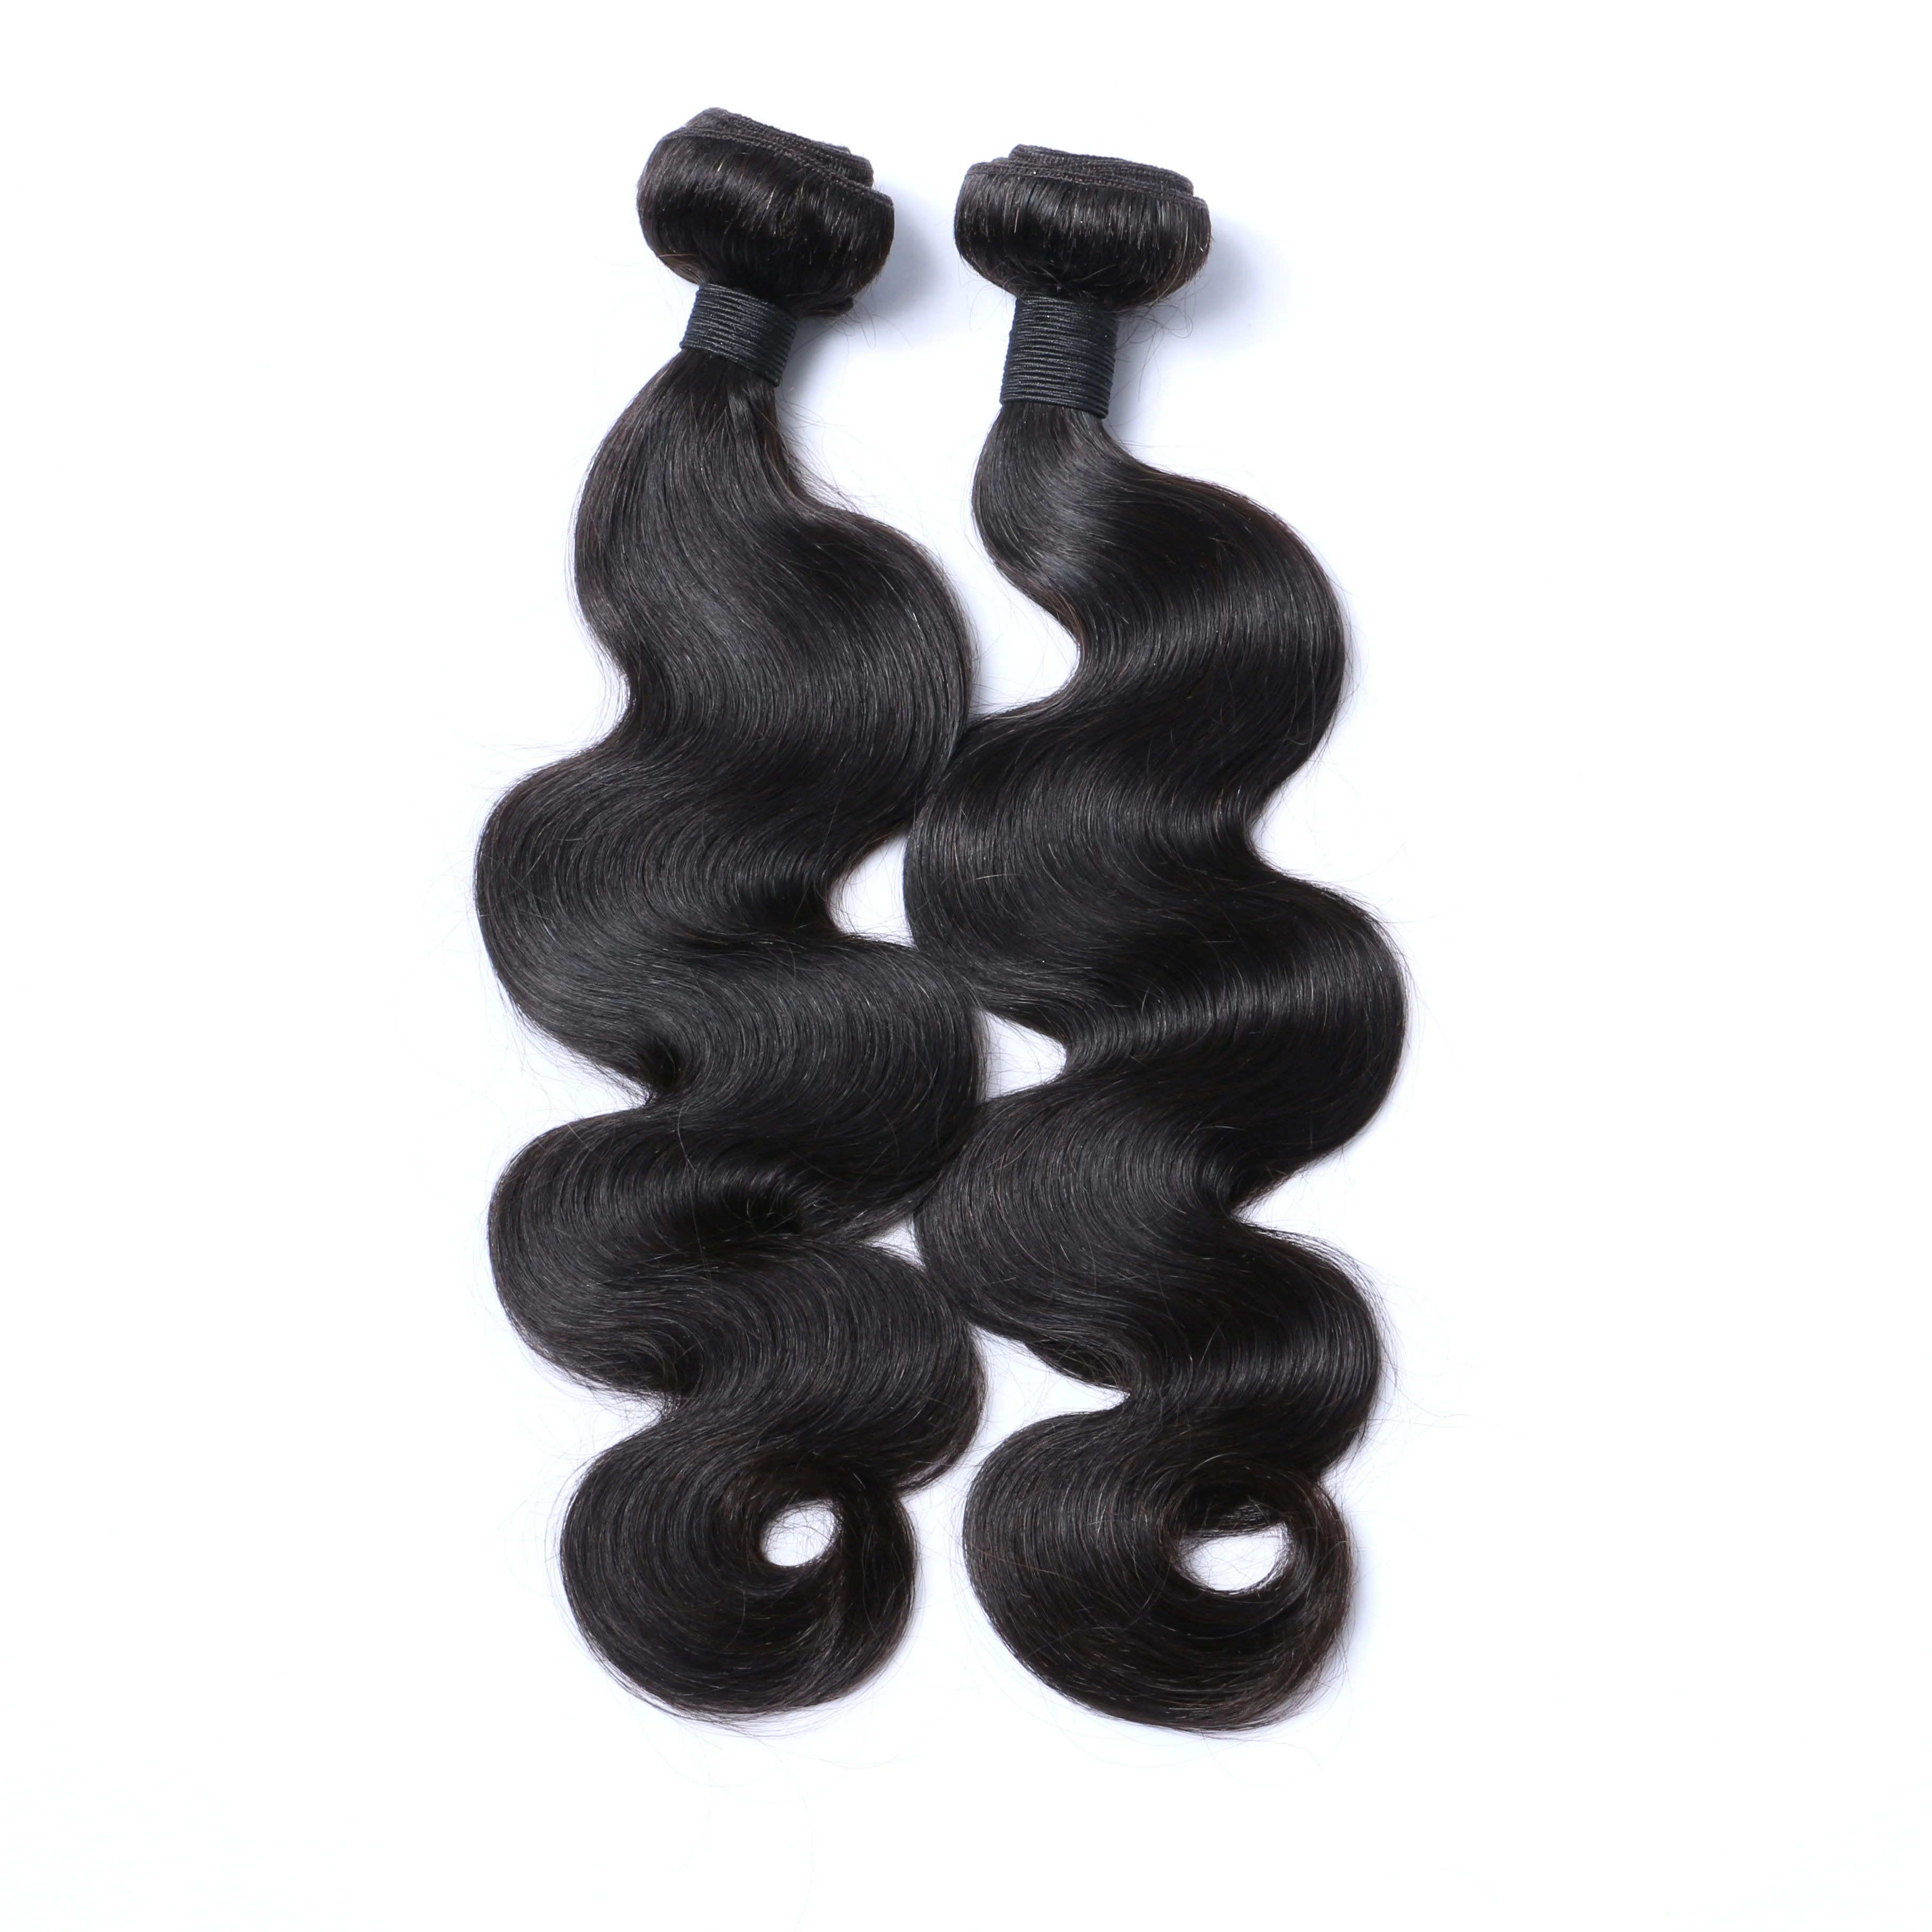 

Indian/Brazilian/Peruvian Wholesale Human Hair Vendor Raw Virgin Cuticle Aligned Body Wave Hair Bundles Weave, Natural black, and accept customer color chart